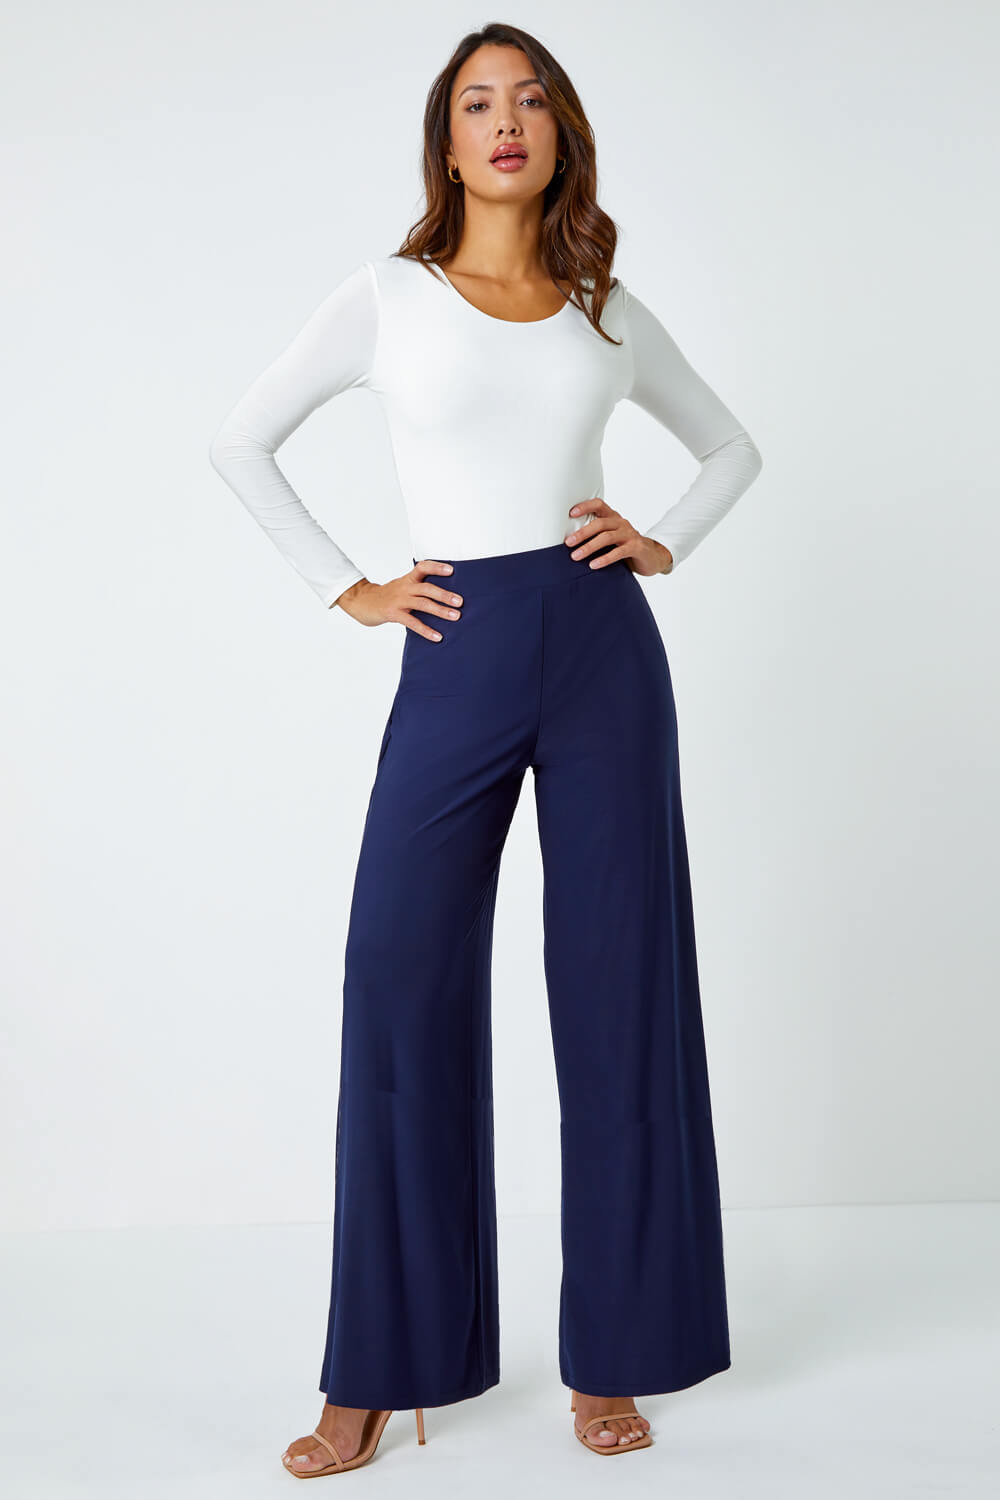 Womens Tapered/Carrot Pants Elegant Pocket High Waist Navy Blue M -  Walmart.com